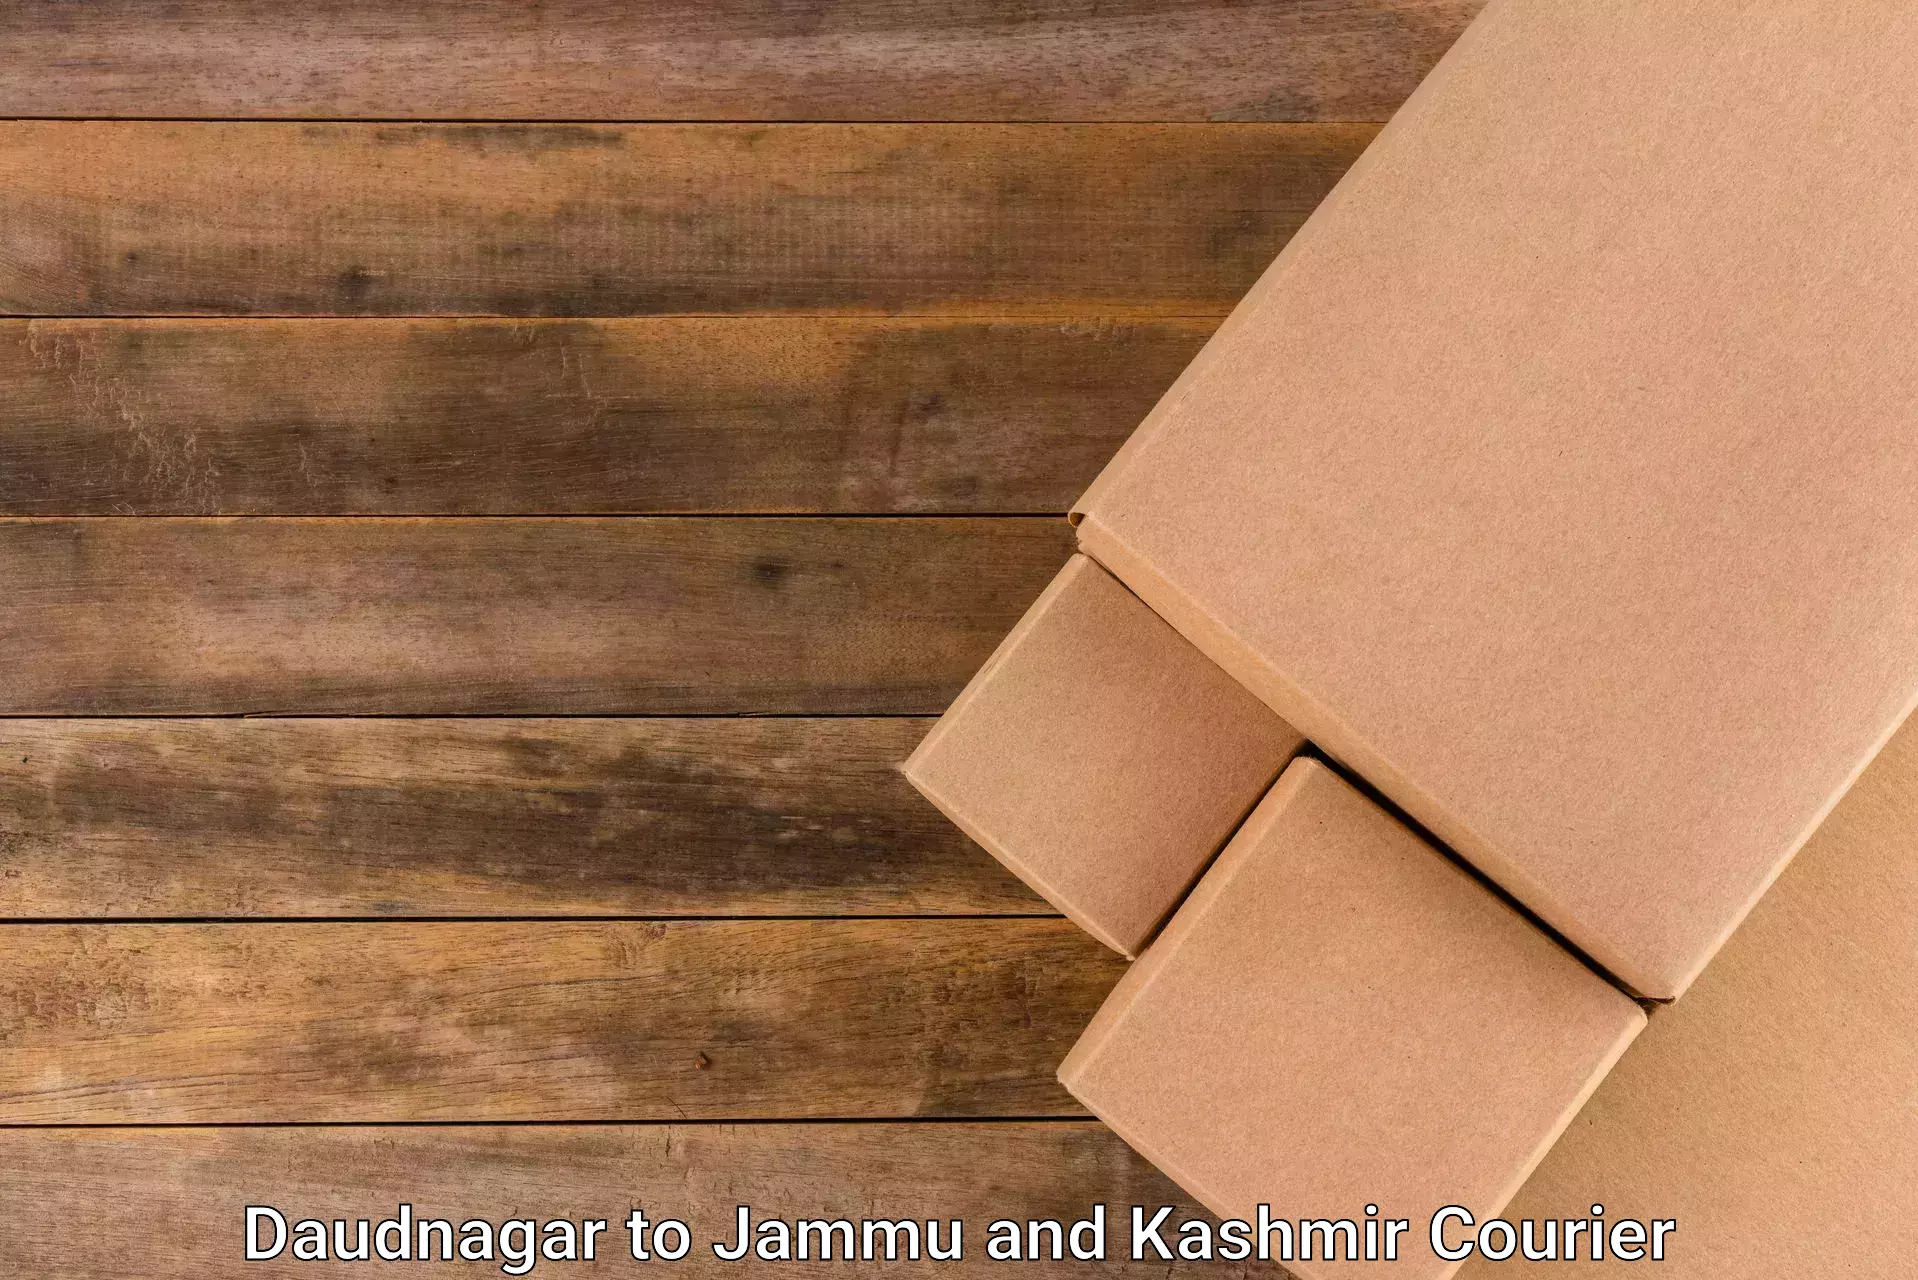 Quality courier partnerships in Daudnagar to Jammu and Kashmir